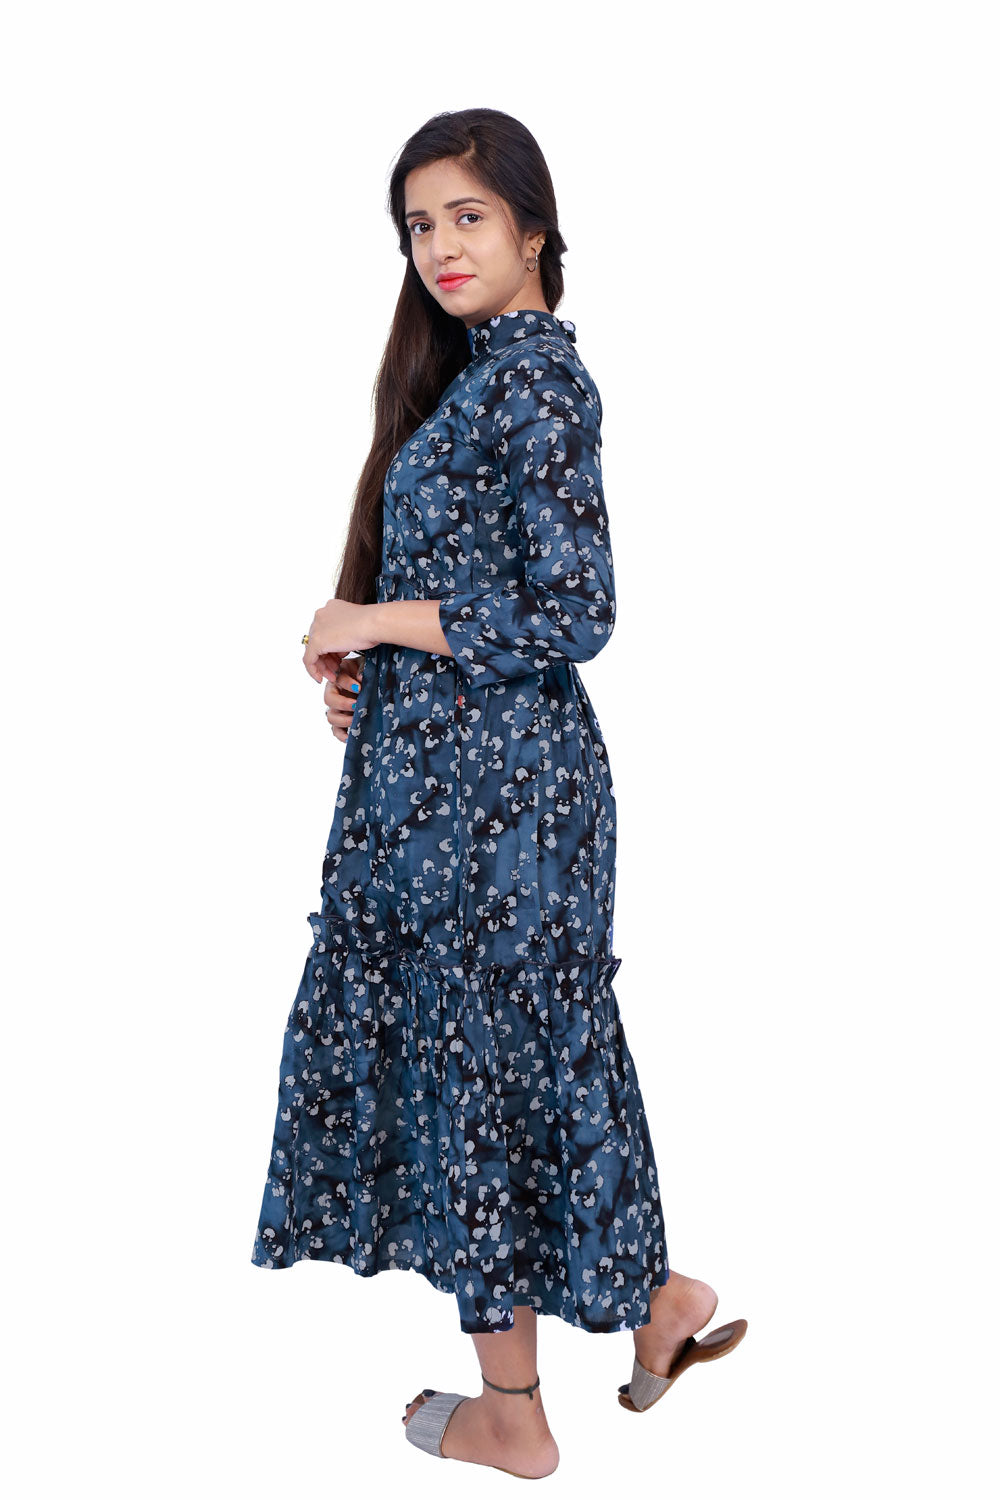 Navy Blue & Black Printed Gown | S3G633